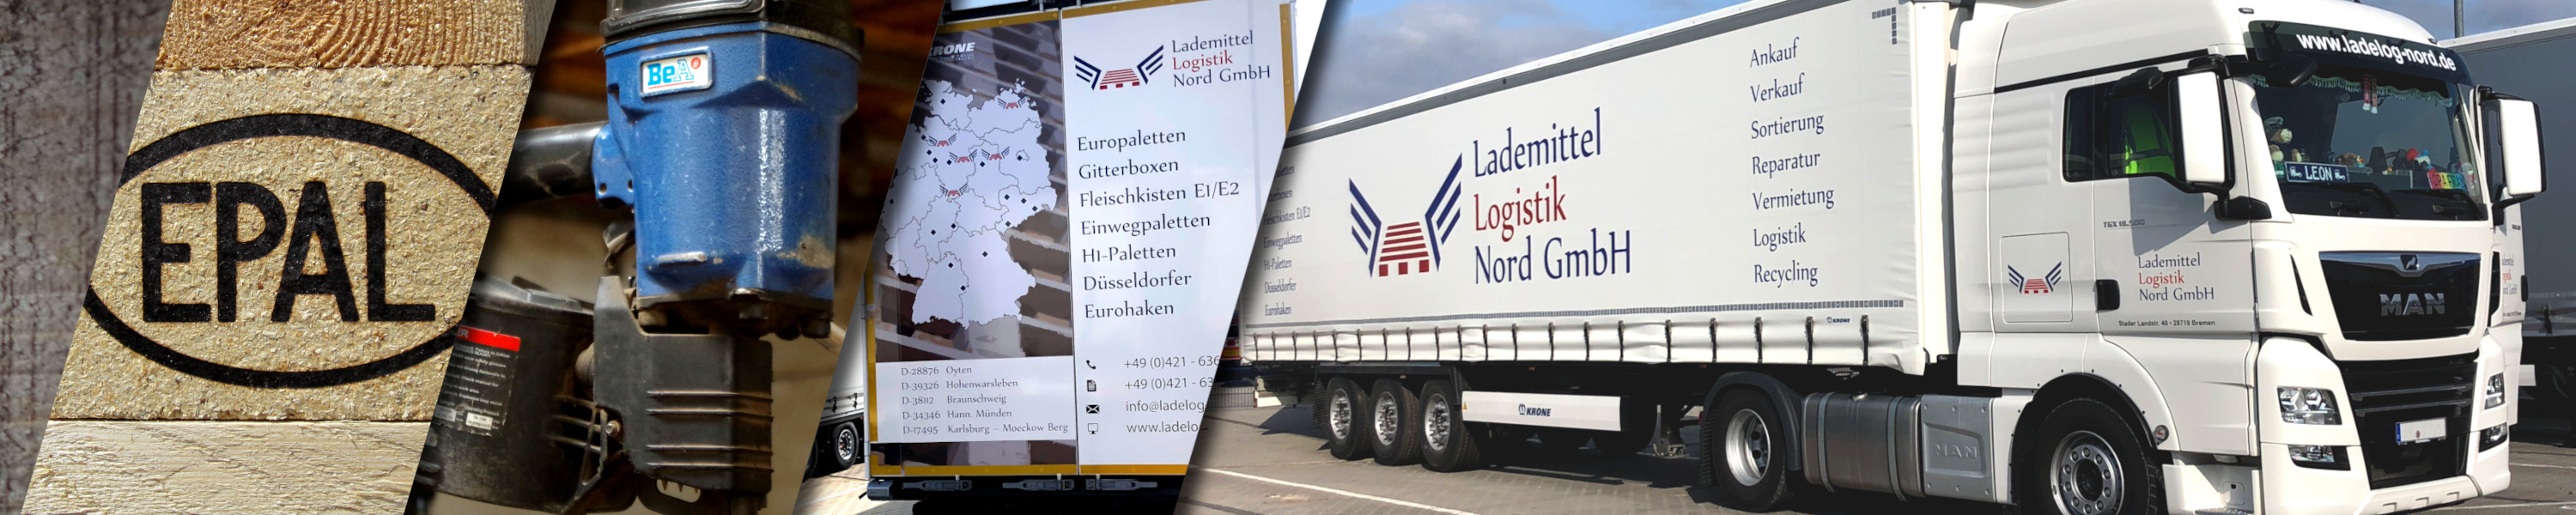 Lademittel Logistik Nord GmbH